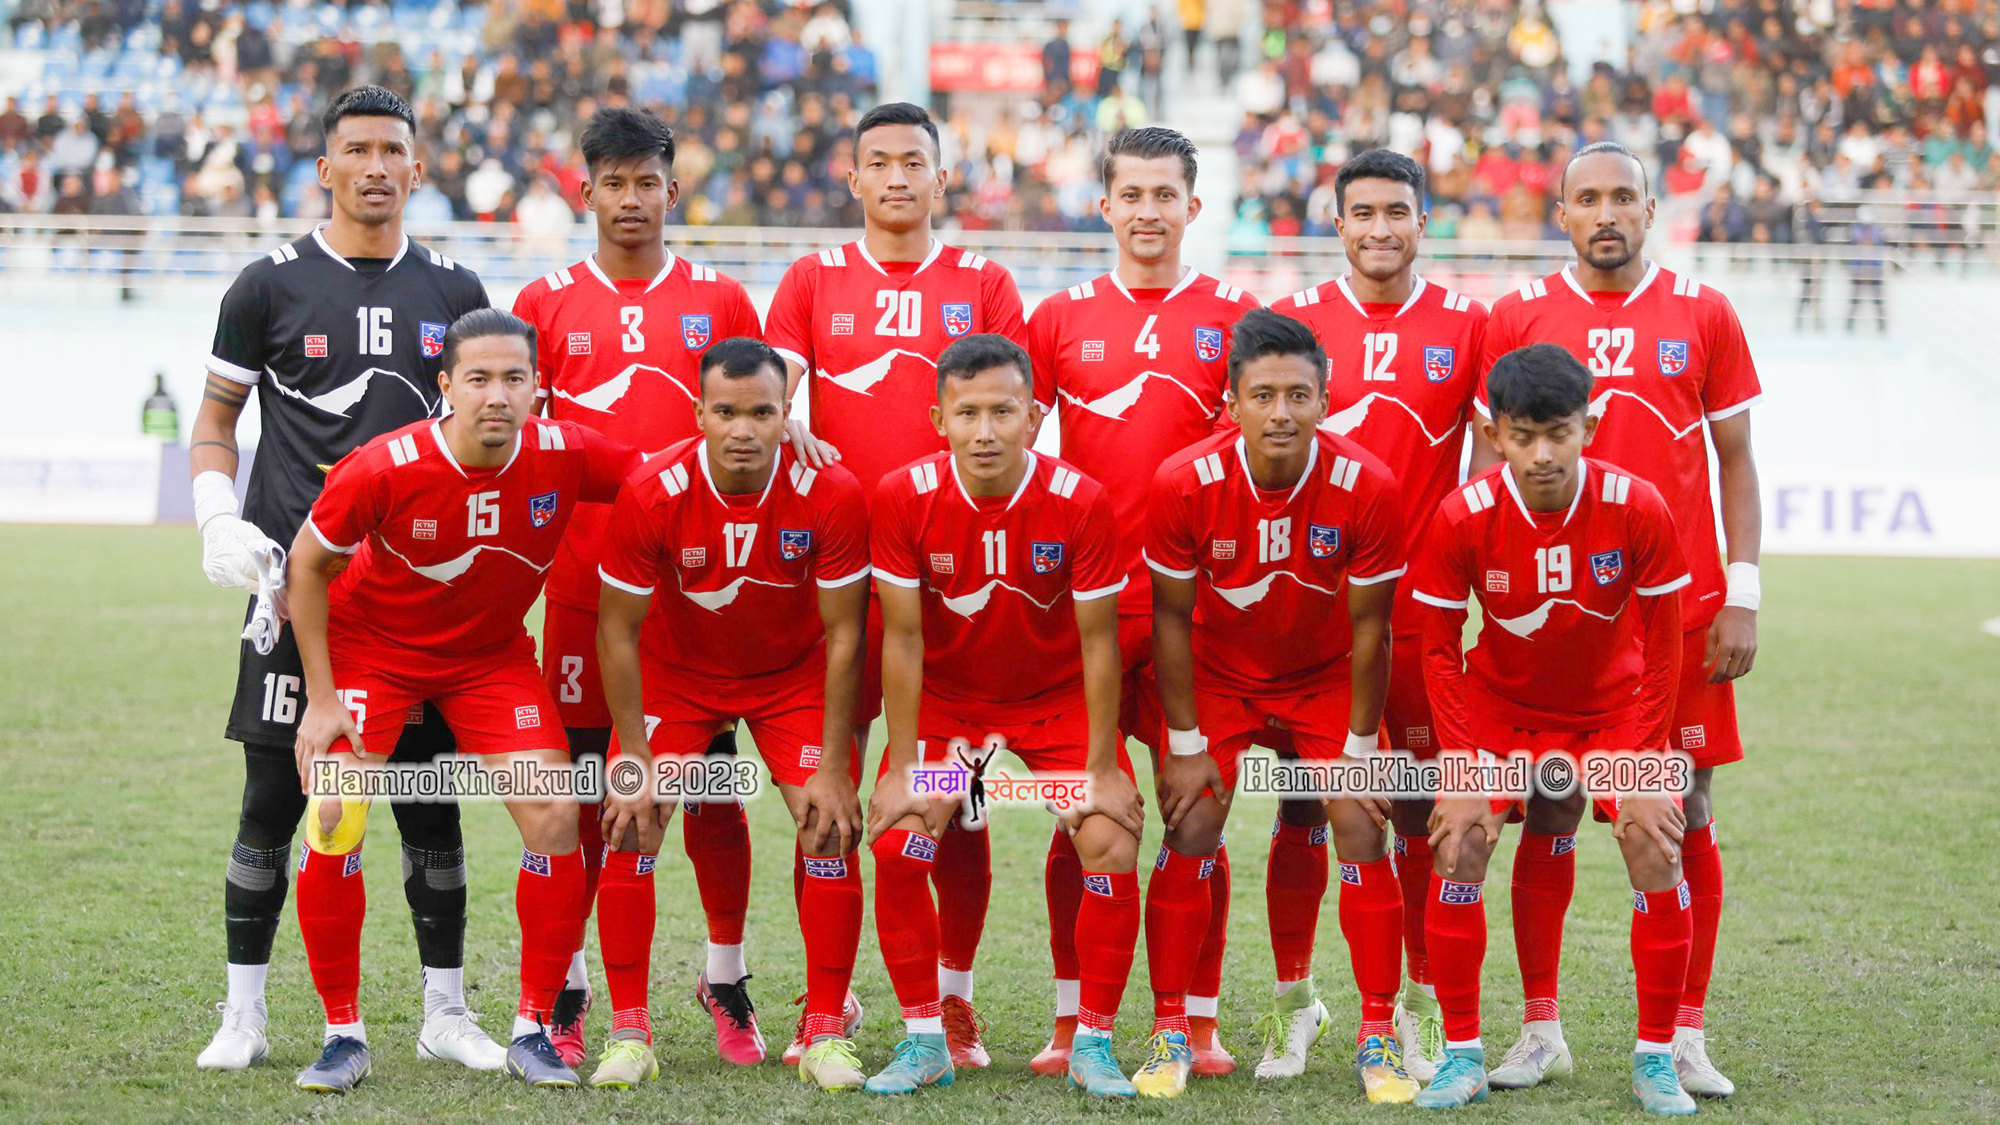 Nepal National Football Team vs Laos National Football Team 202303